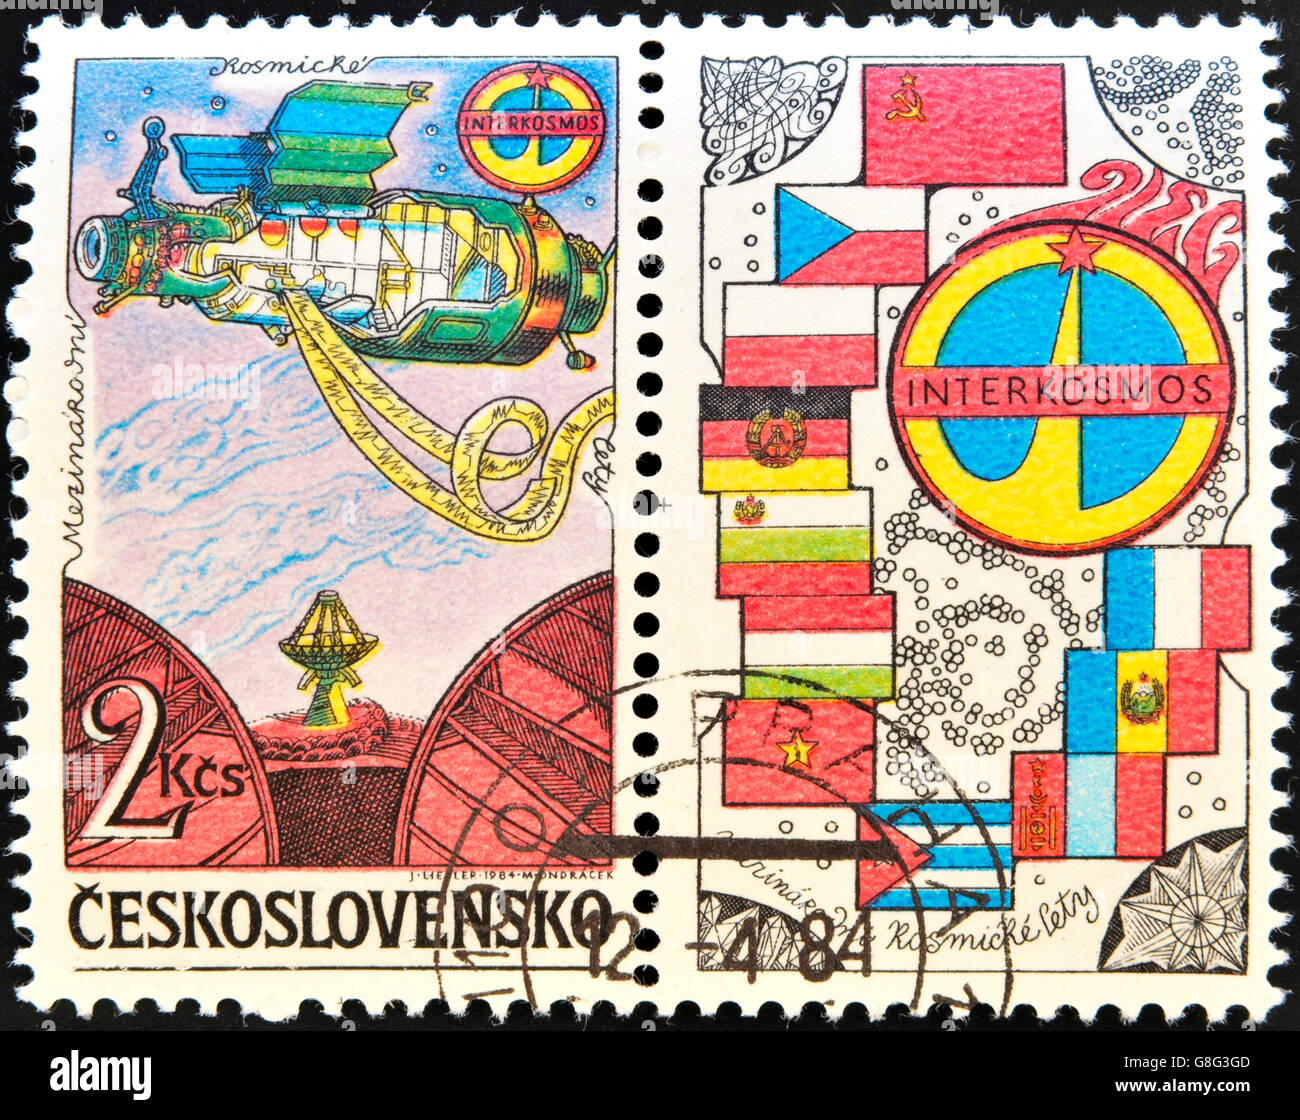 CZECHOSLOVAKIA - CIRCA 1984: A stamp printed in Czechoslovakia dedicated to Soviet Intercosmos program shows orbital station and Stock Photo